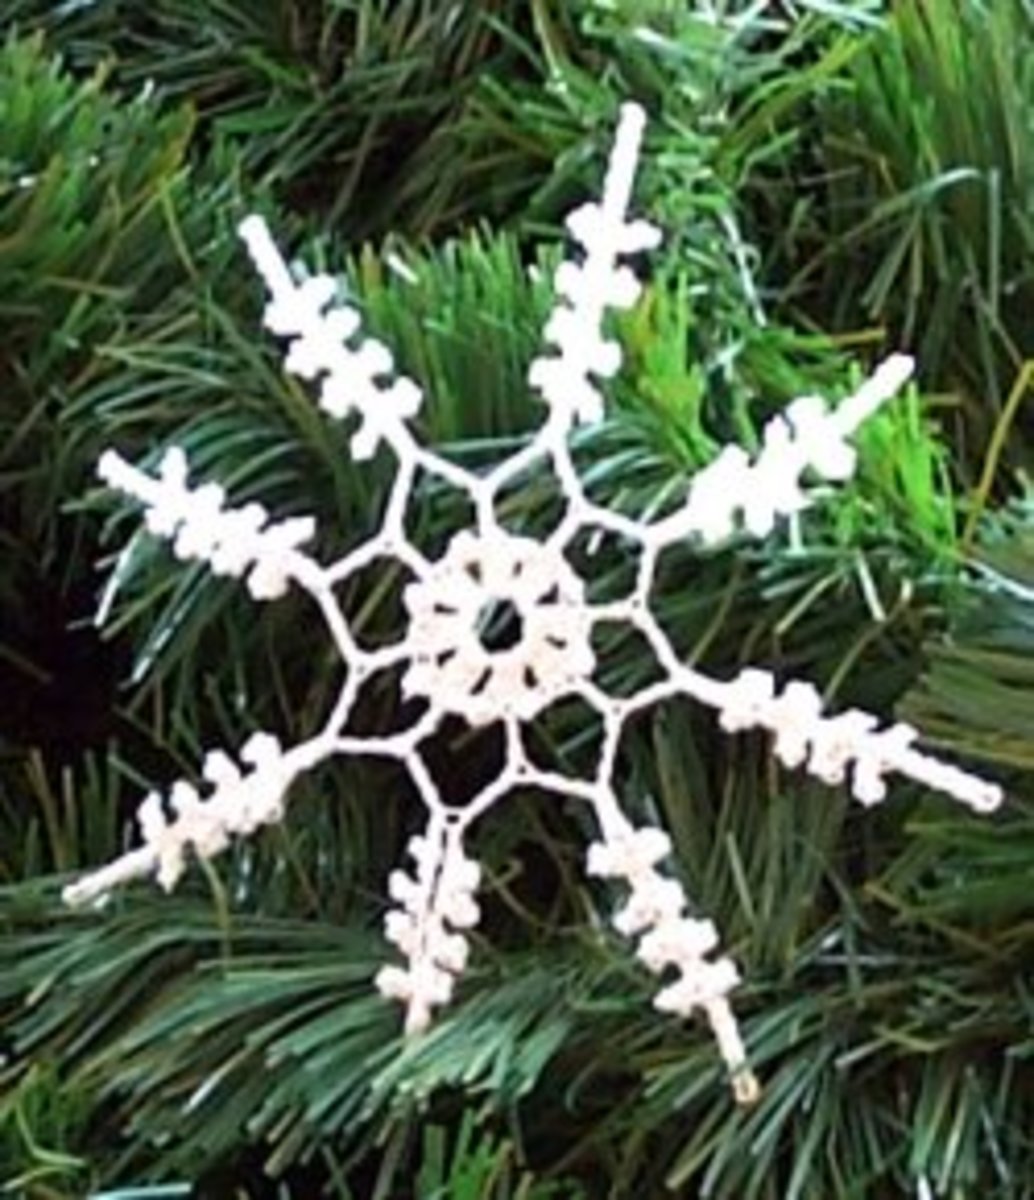 Homemade snowflake ornament